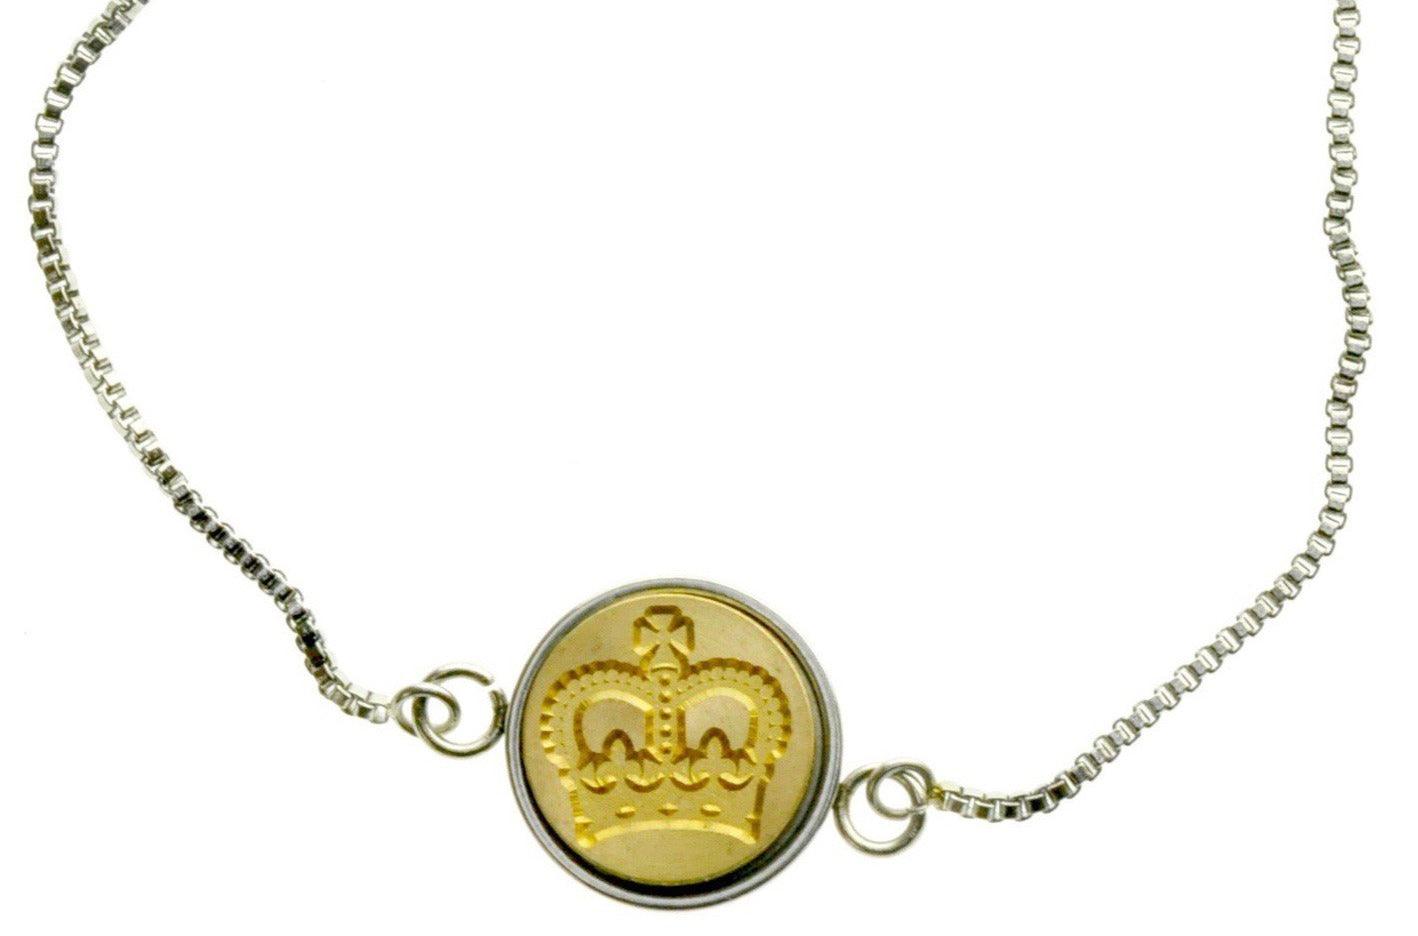 Royal Crown Signet Bracelet - Backtozero B20 - 10mm, 12mm, adjustable, bracelet, brass, crown, minimal, signet, signet bracelet, stainless steel